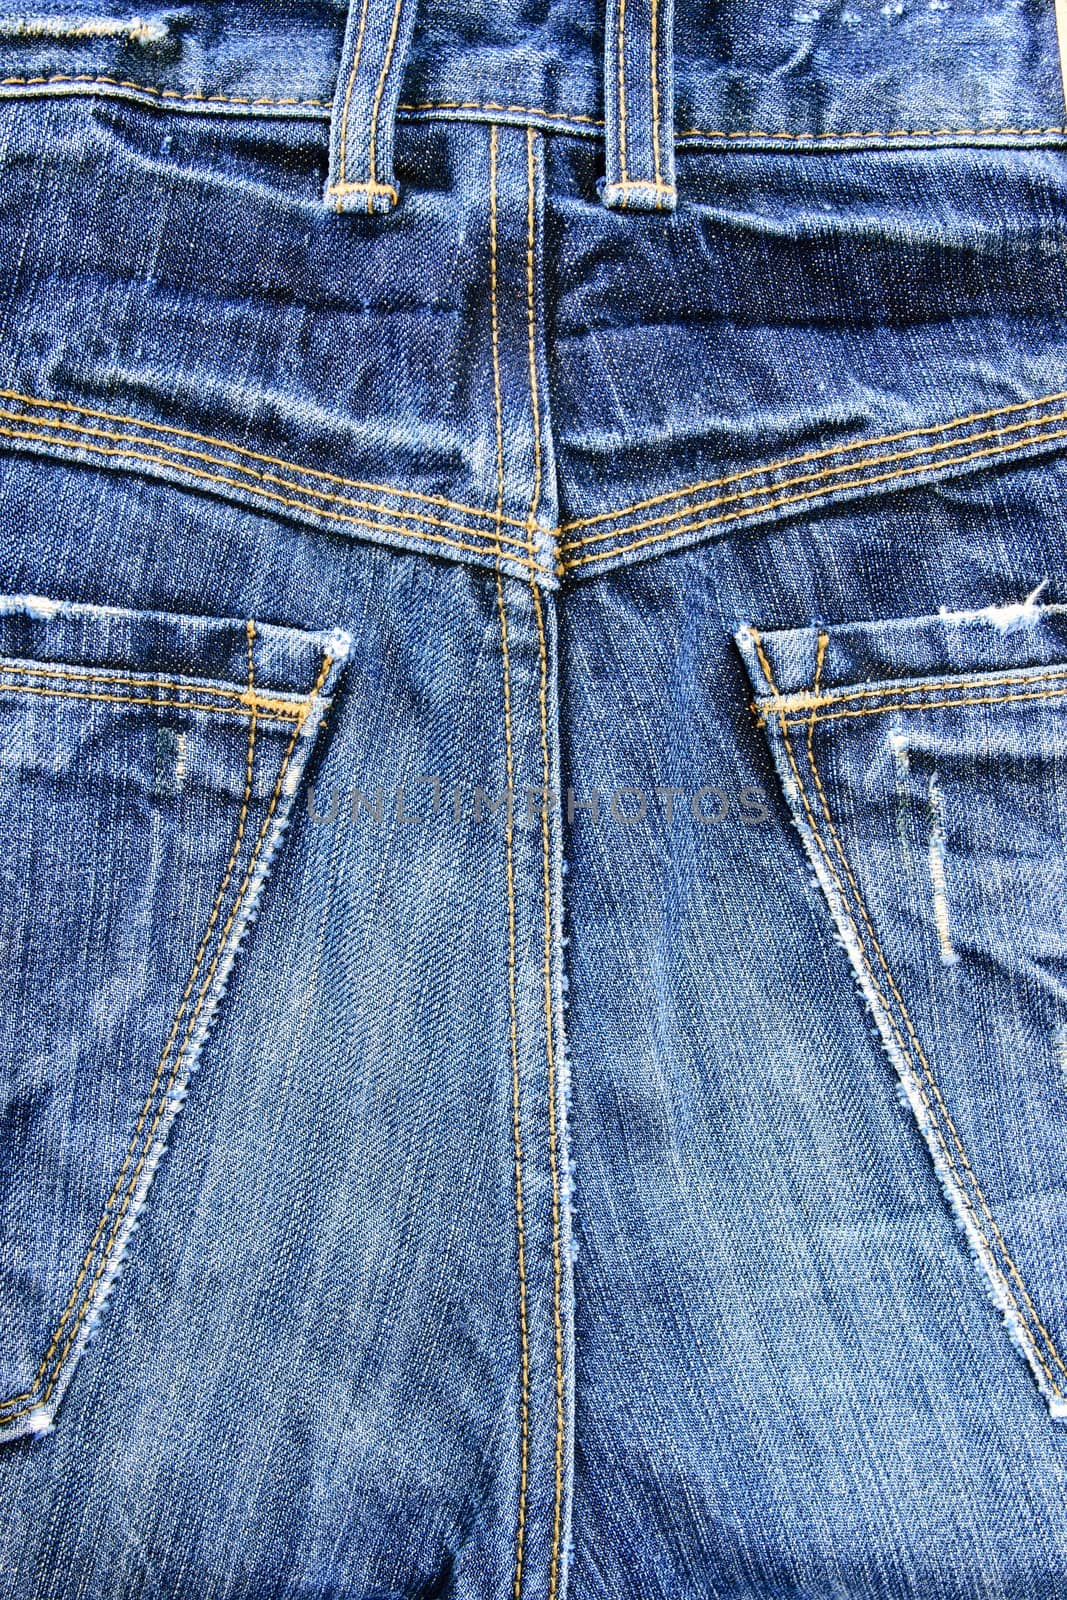 blue jeans by wattanaphob